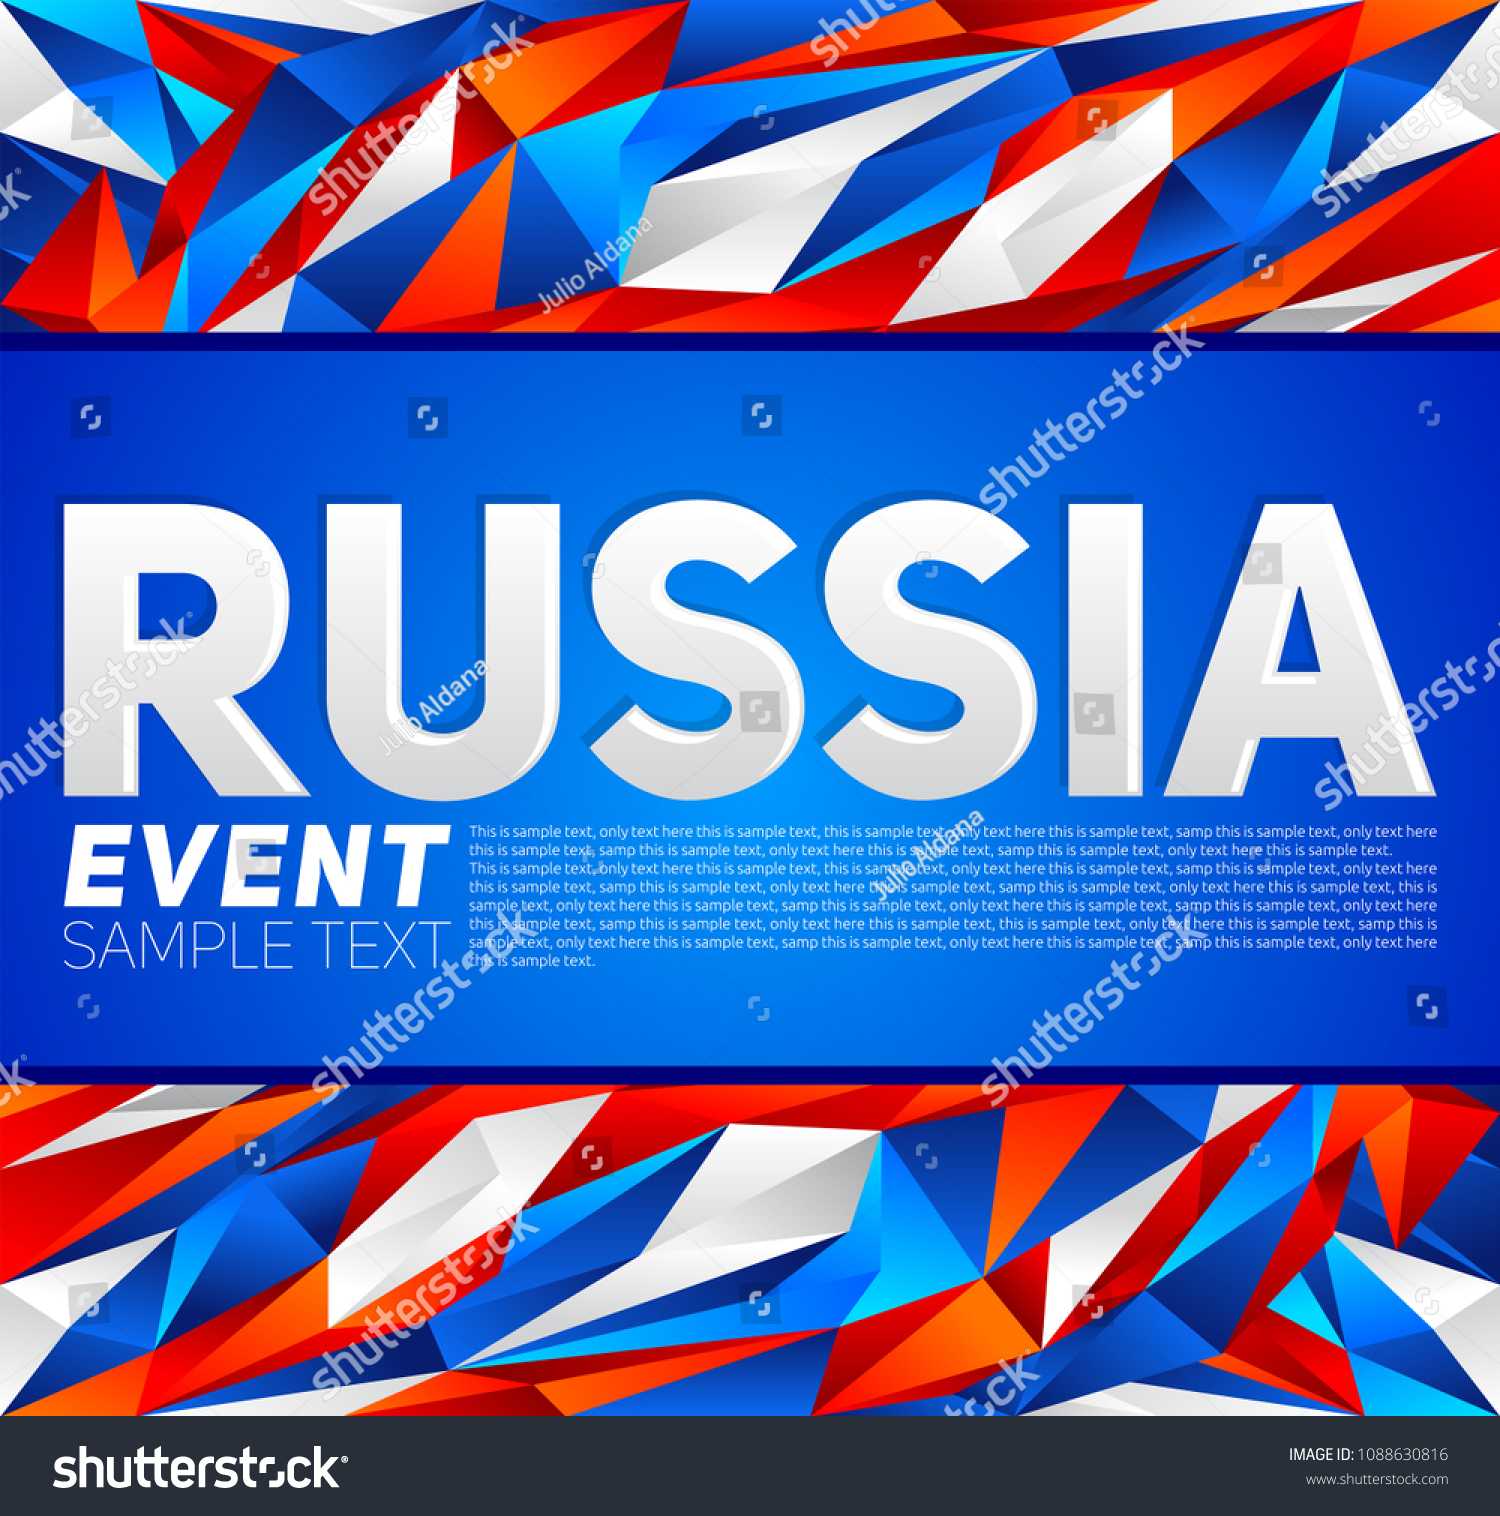 Russia Event Banner Template Vector Modern Stock Image For Event Banner Template